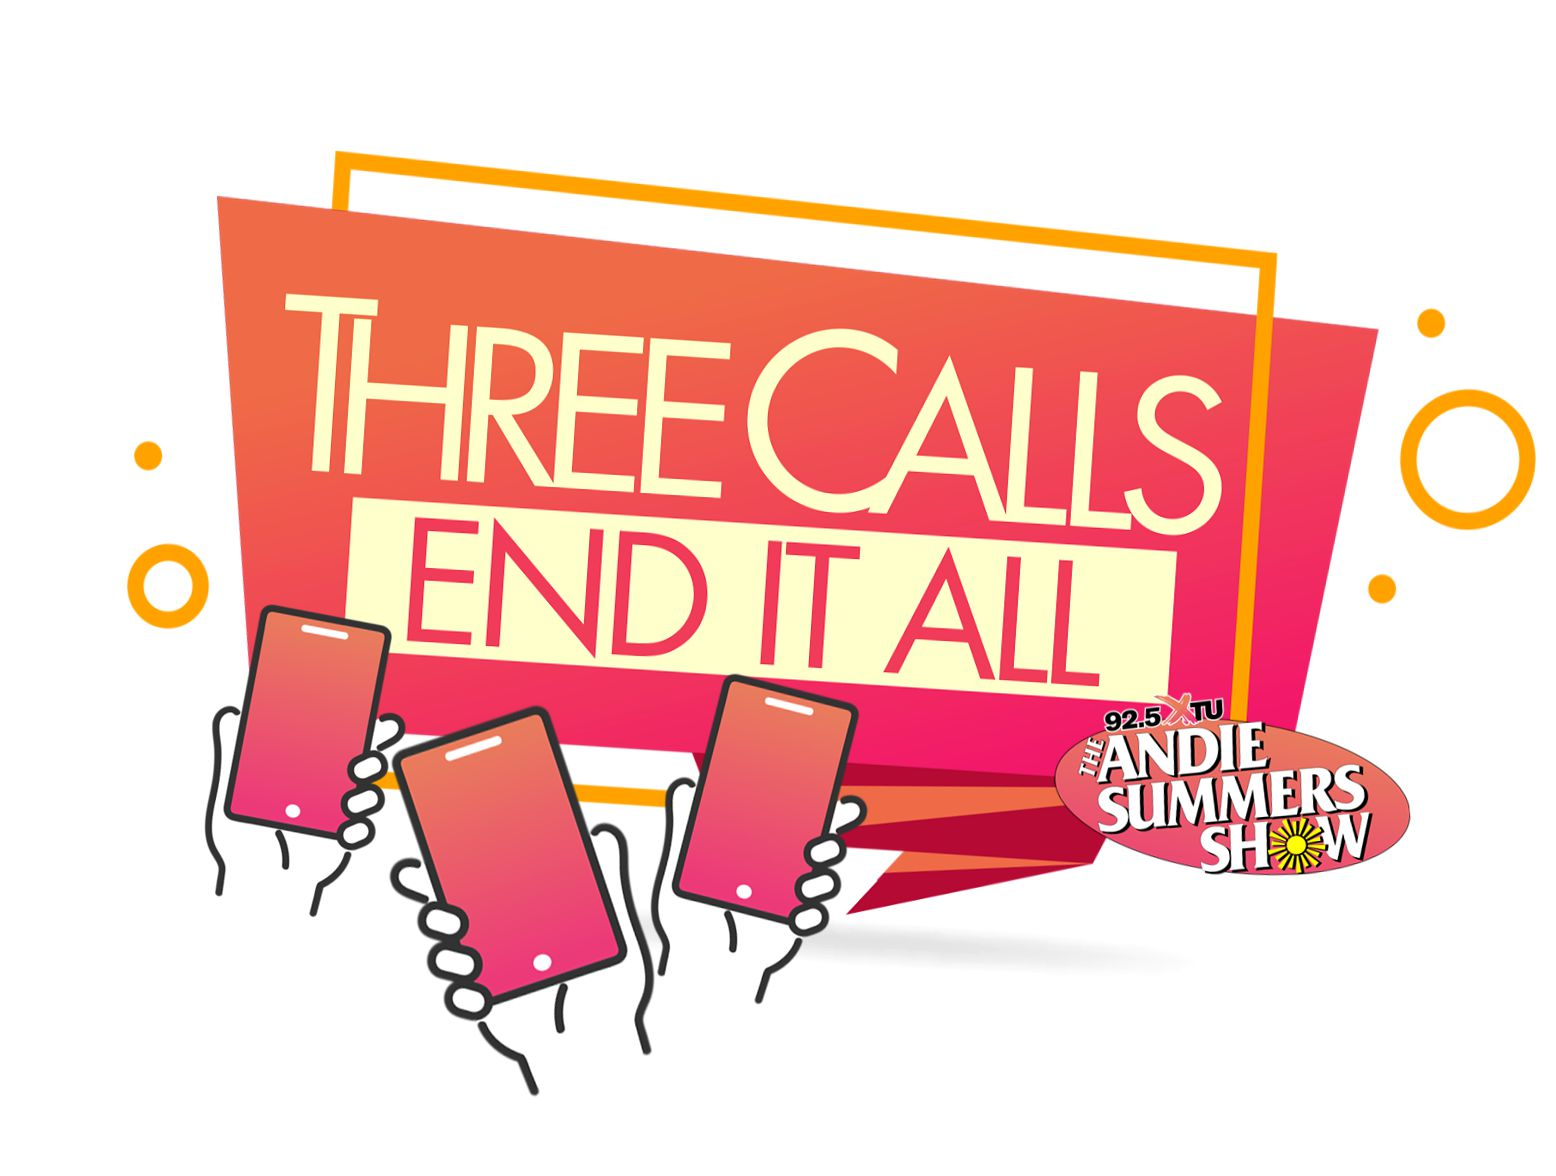 Three Calls End It All - Prom Date Debate